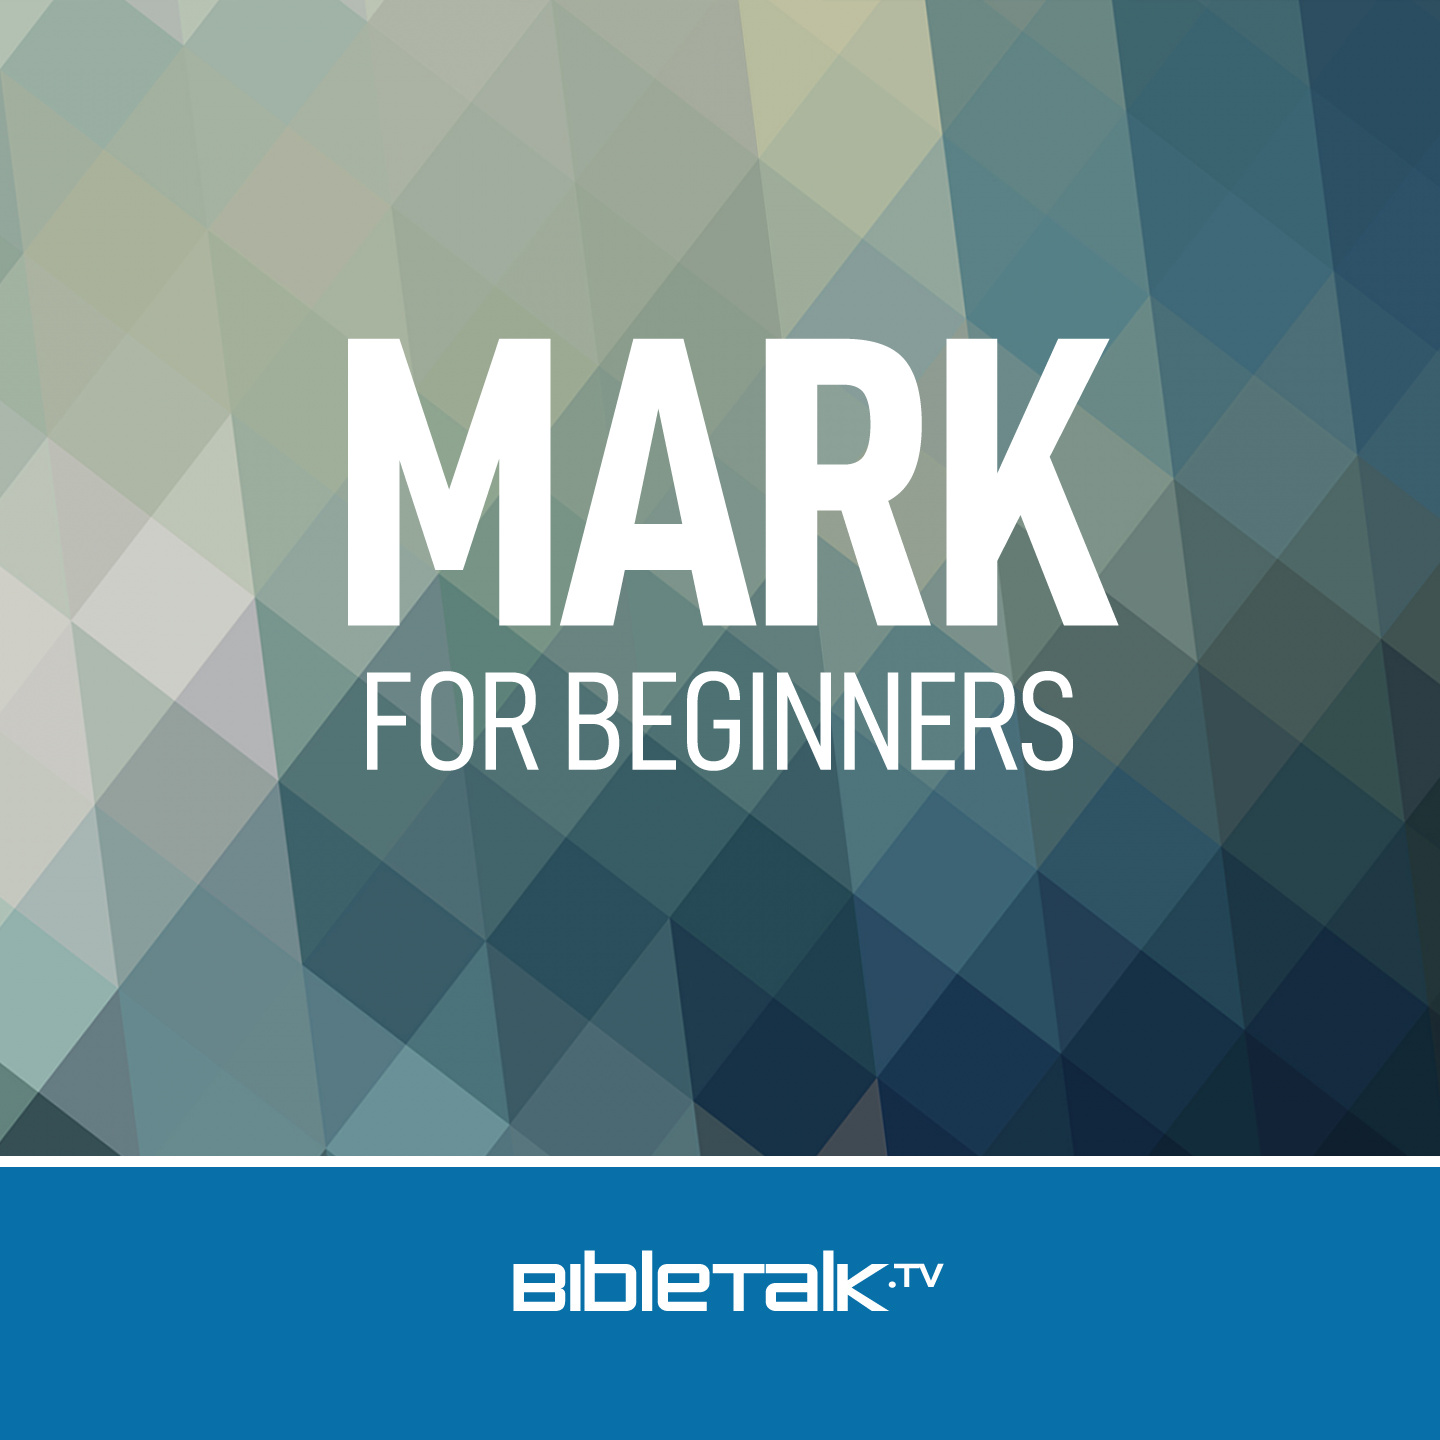 Mark for Beginners — Mike Mazzalongo